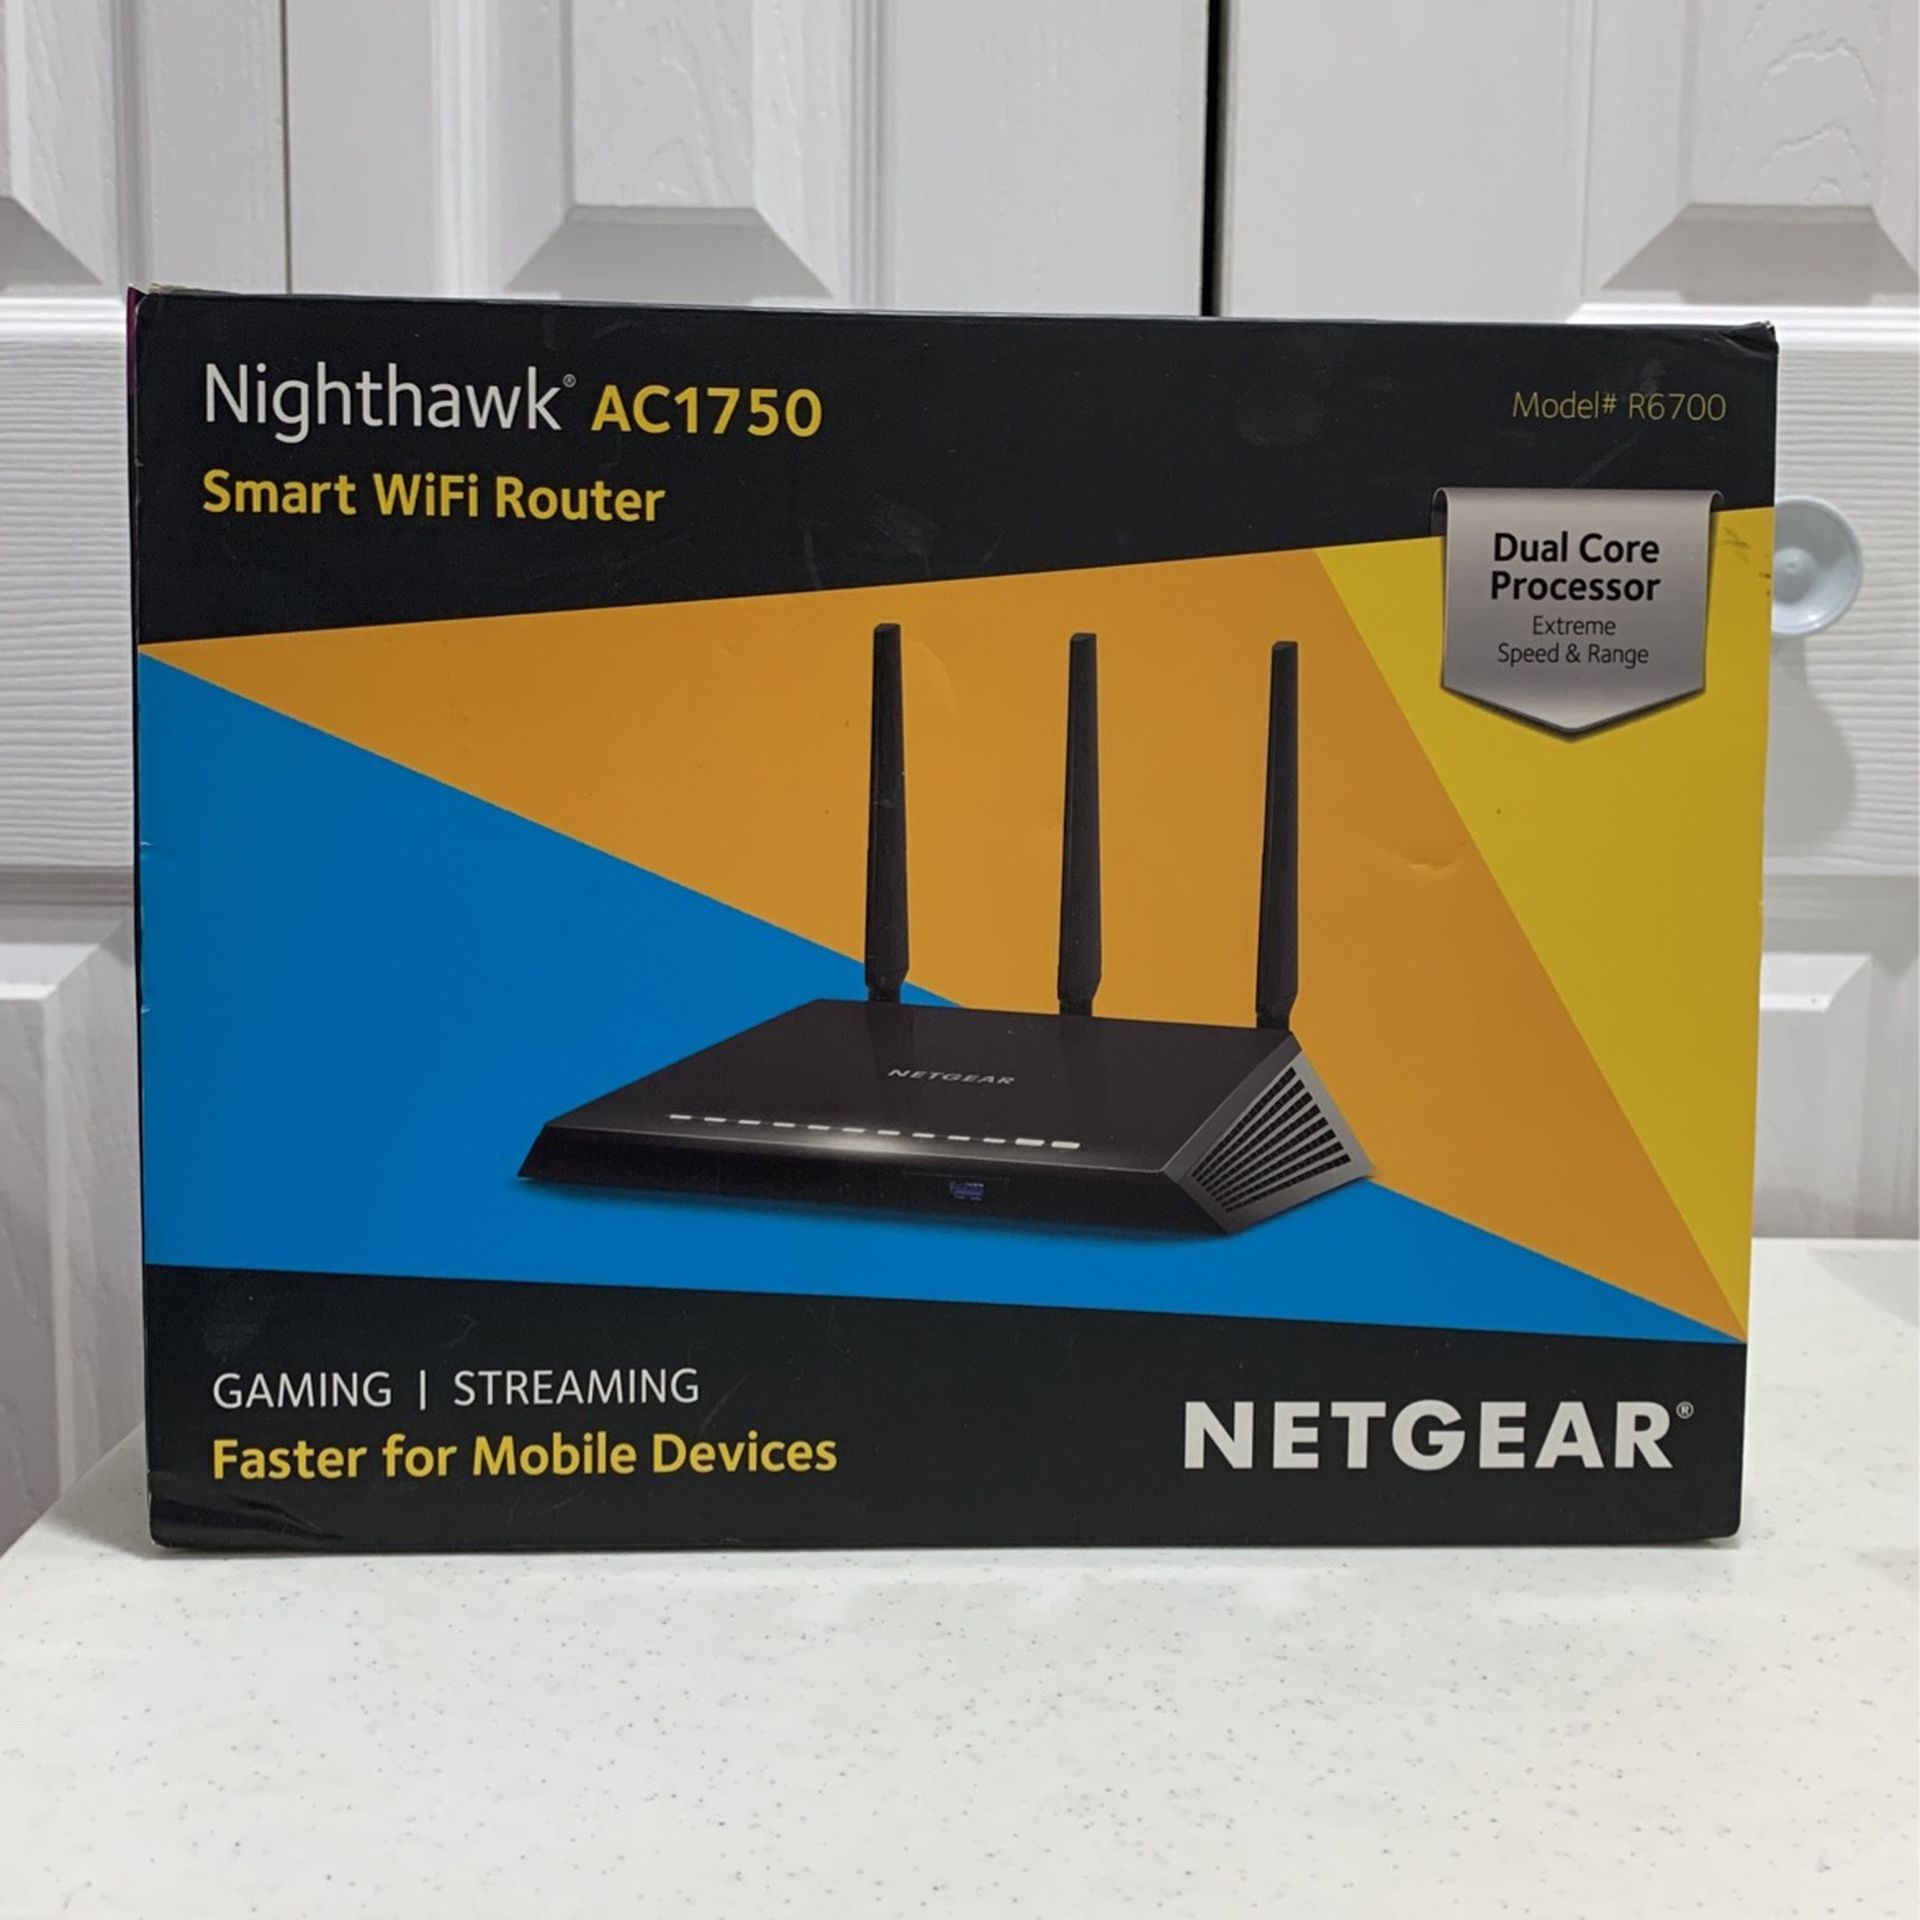 NETGEAR R6700-100NAS - Nighthawk AC1750 Smart WiFi Router